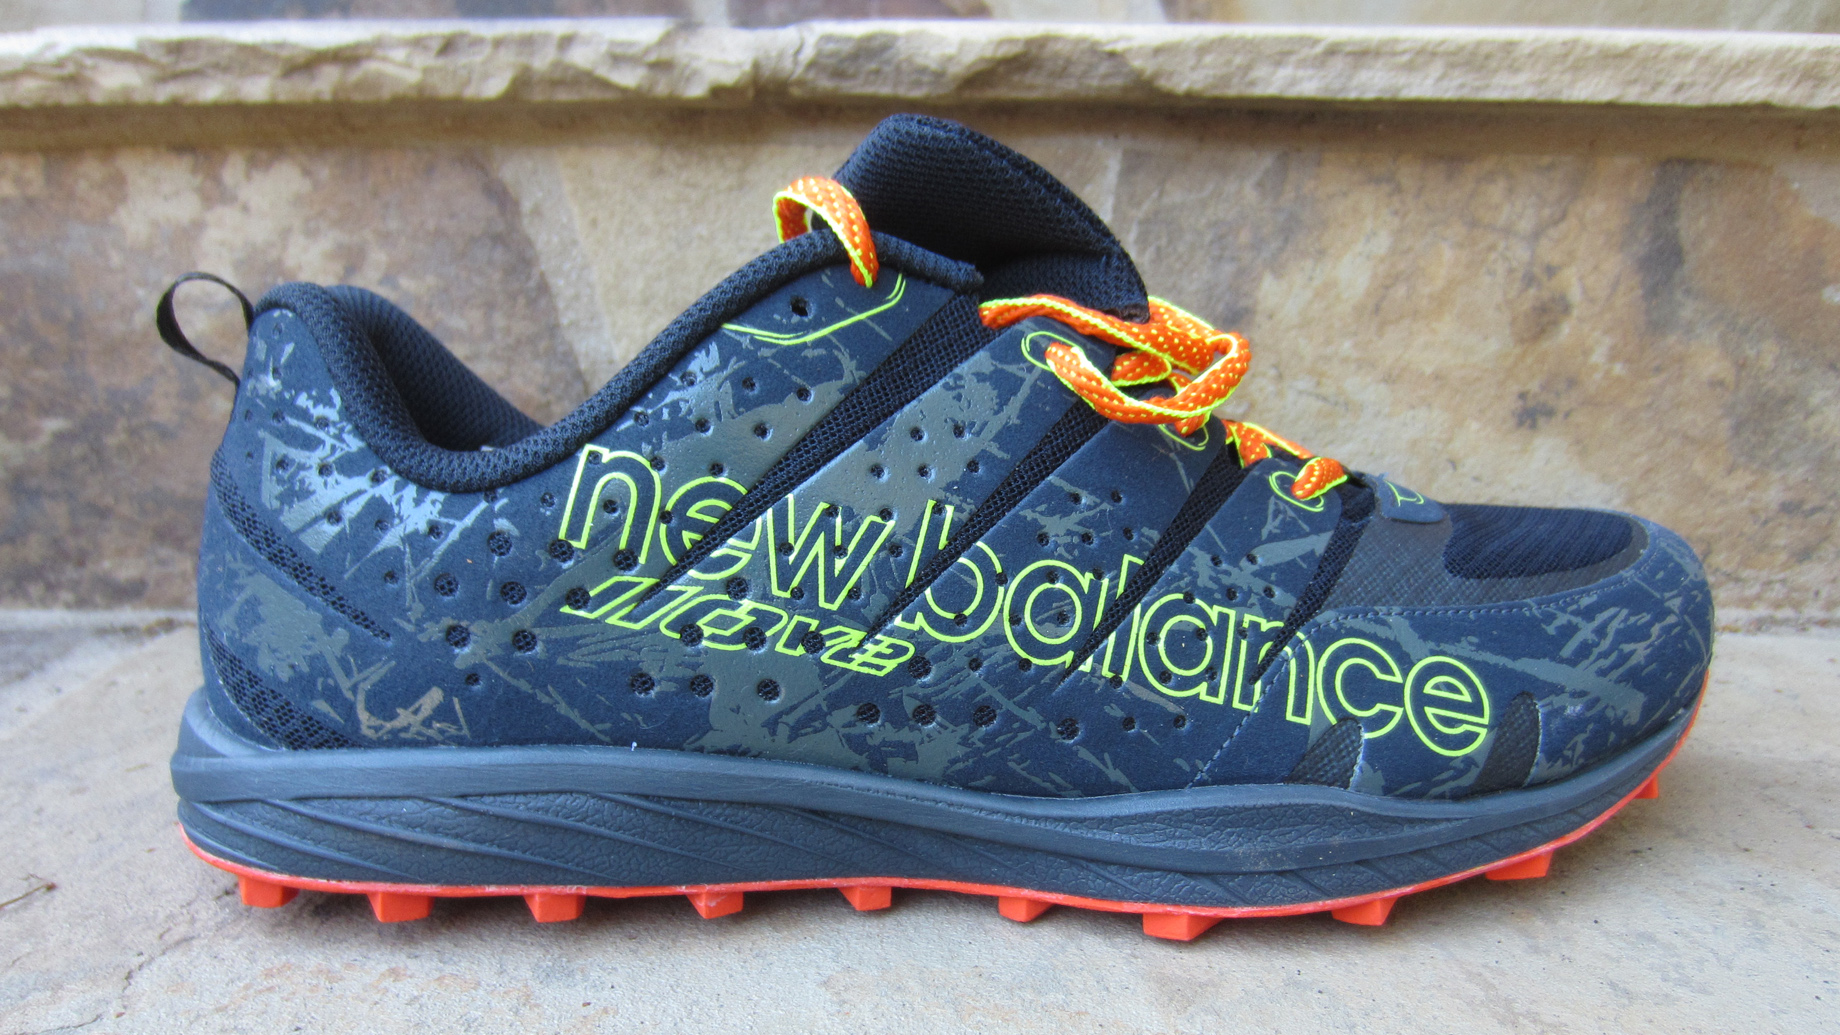 new balance 110v2 trail running shoes